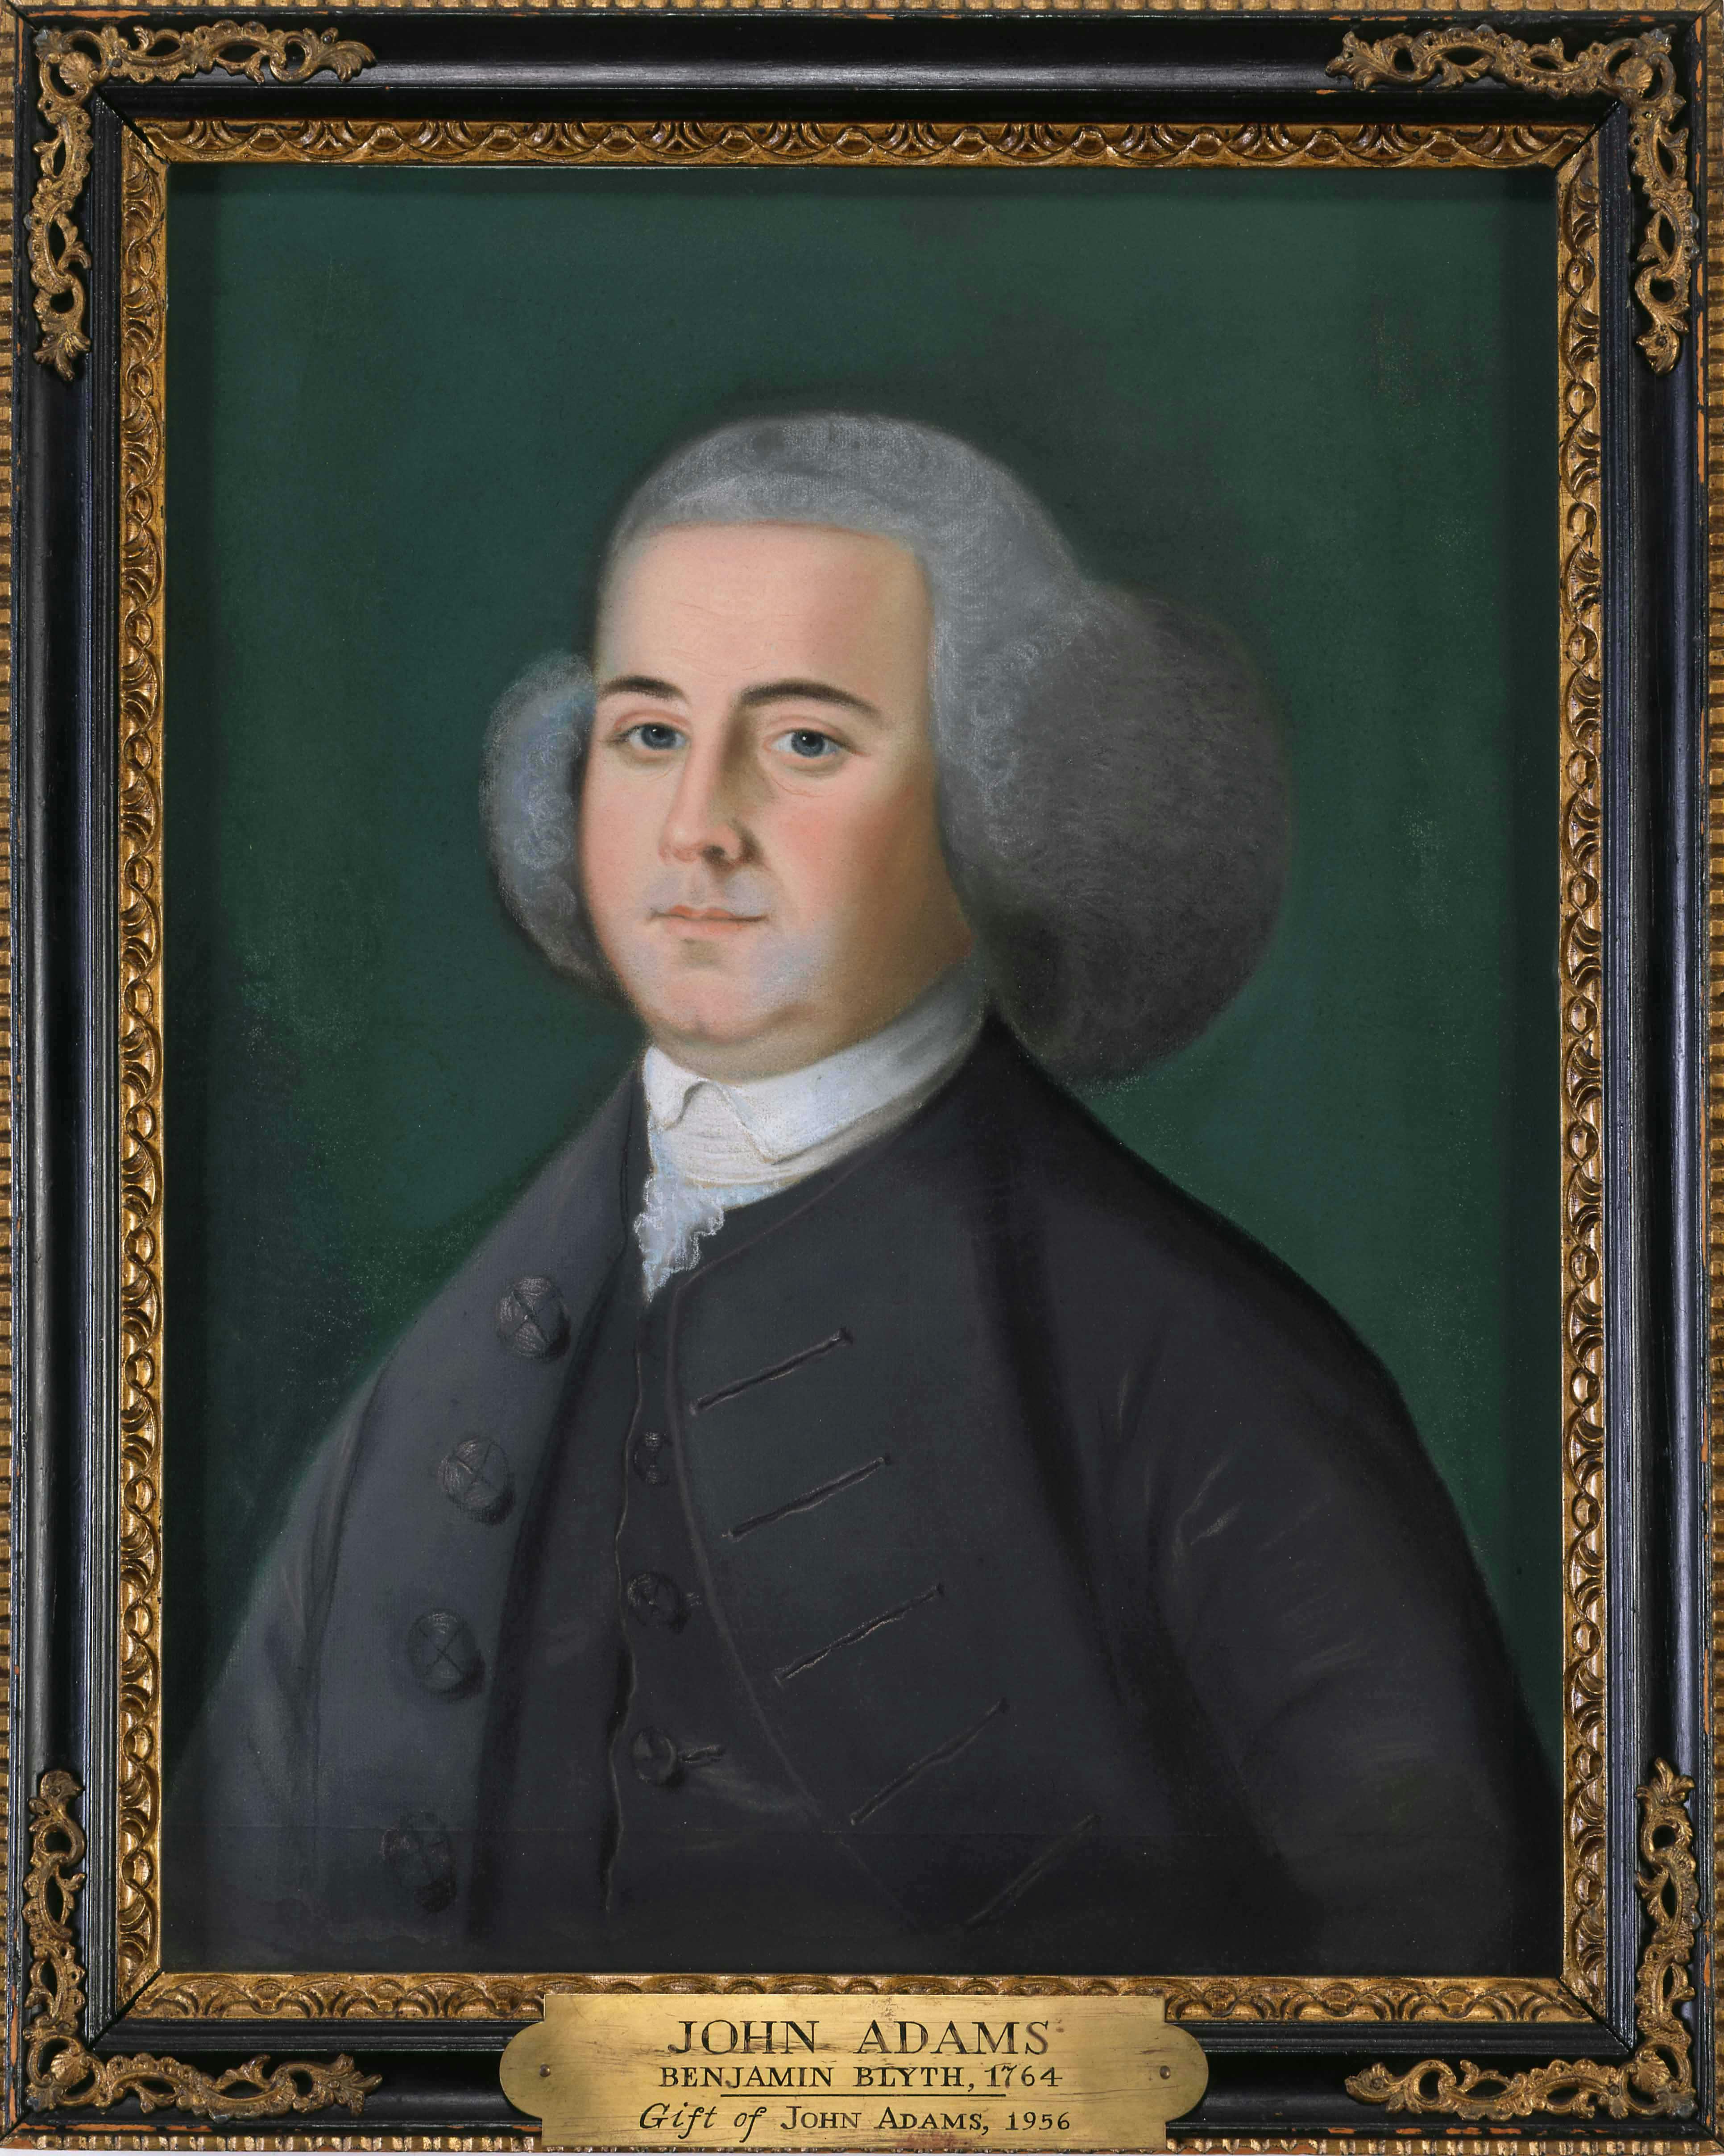 Portrait of John Adams by Benjamin Blyth